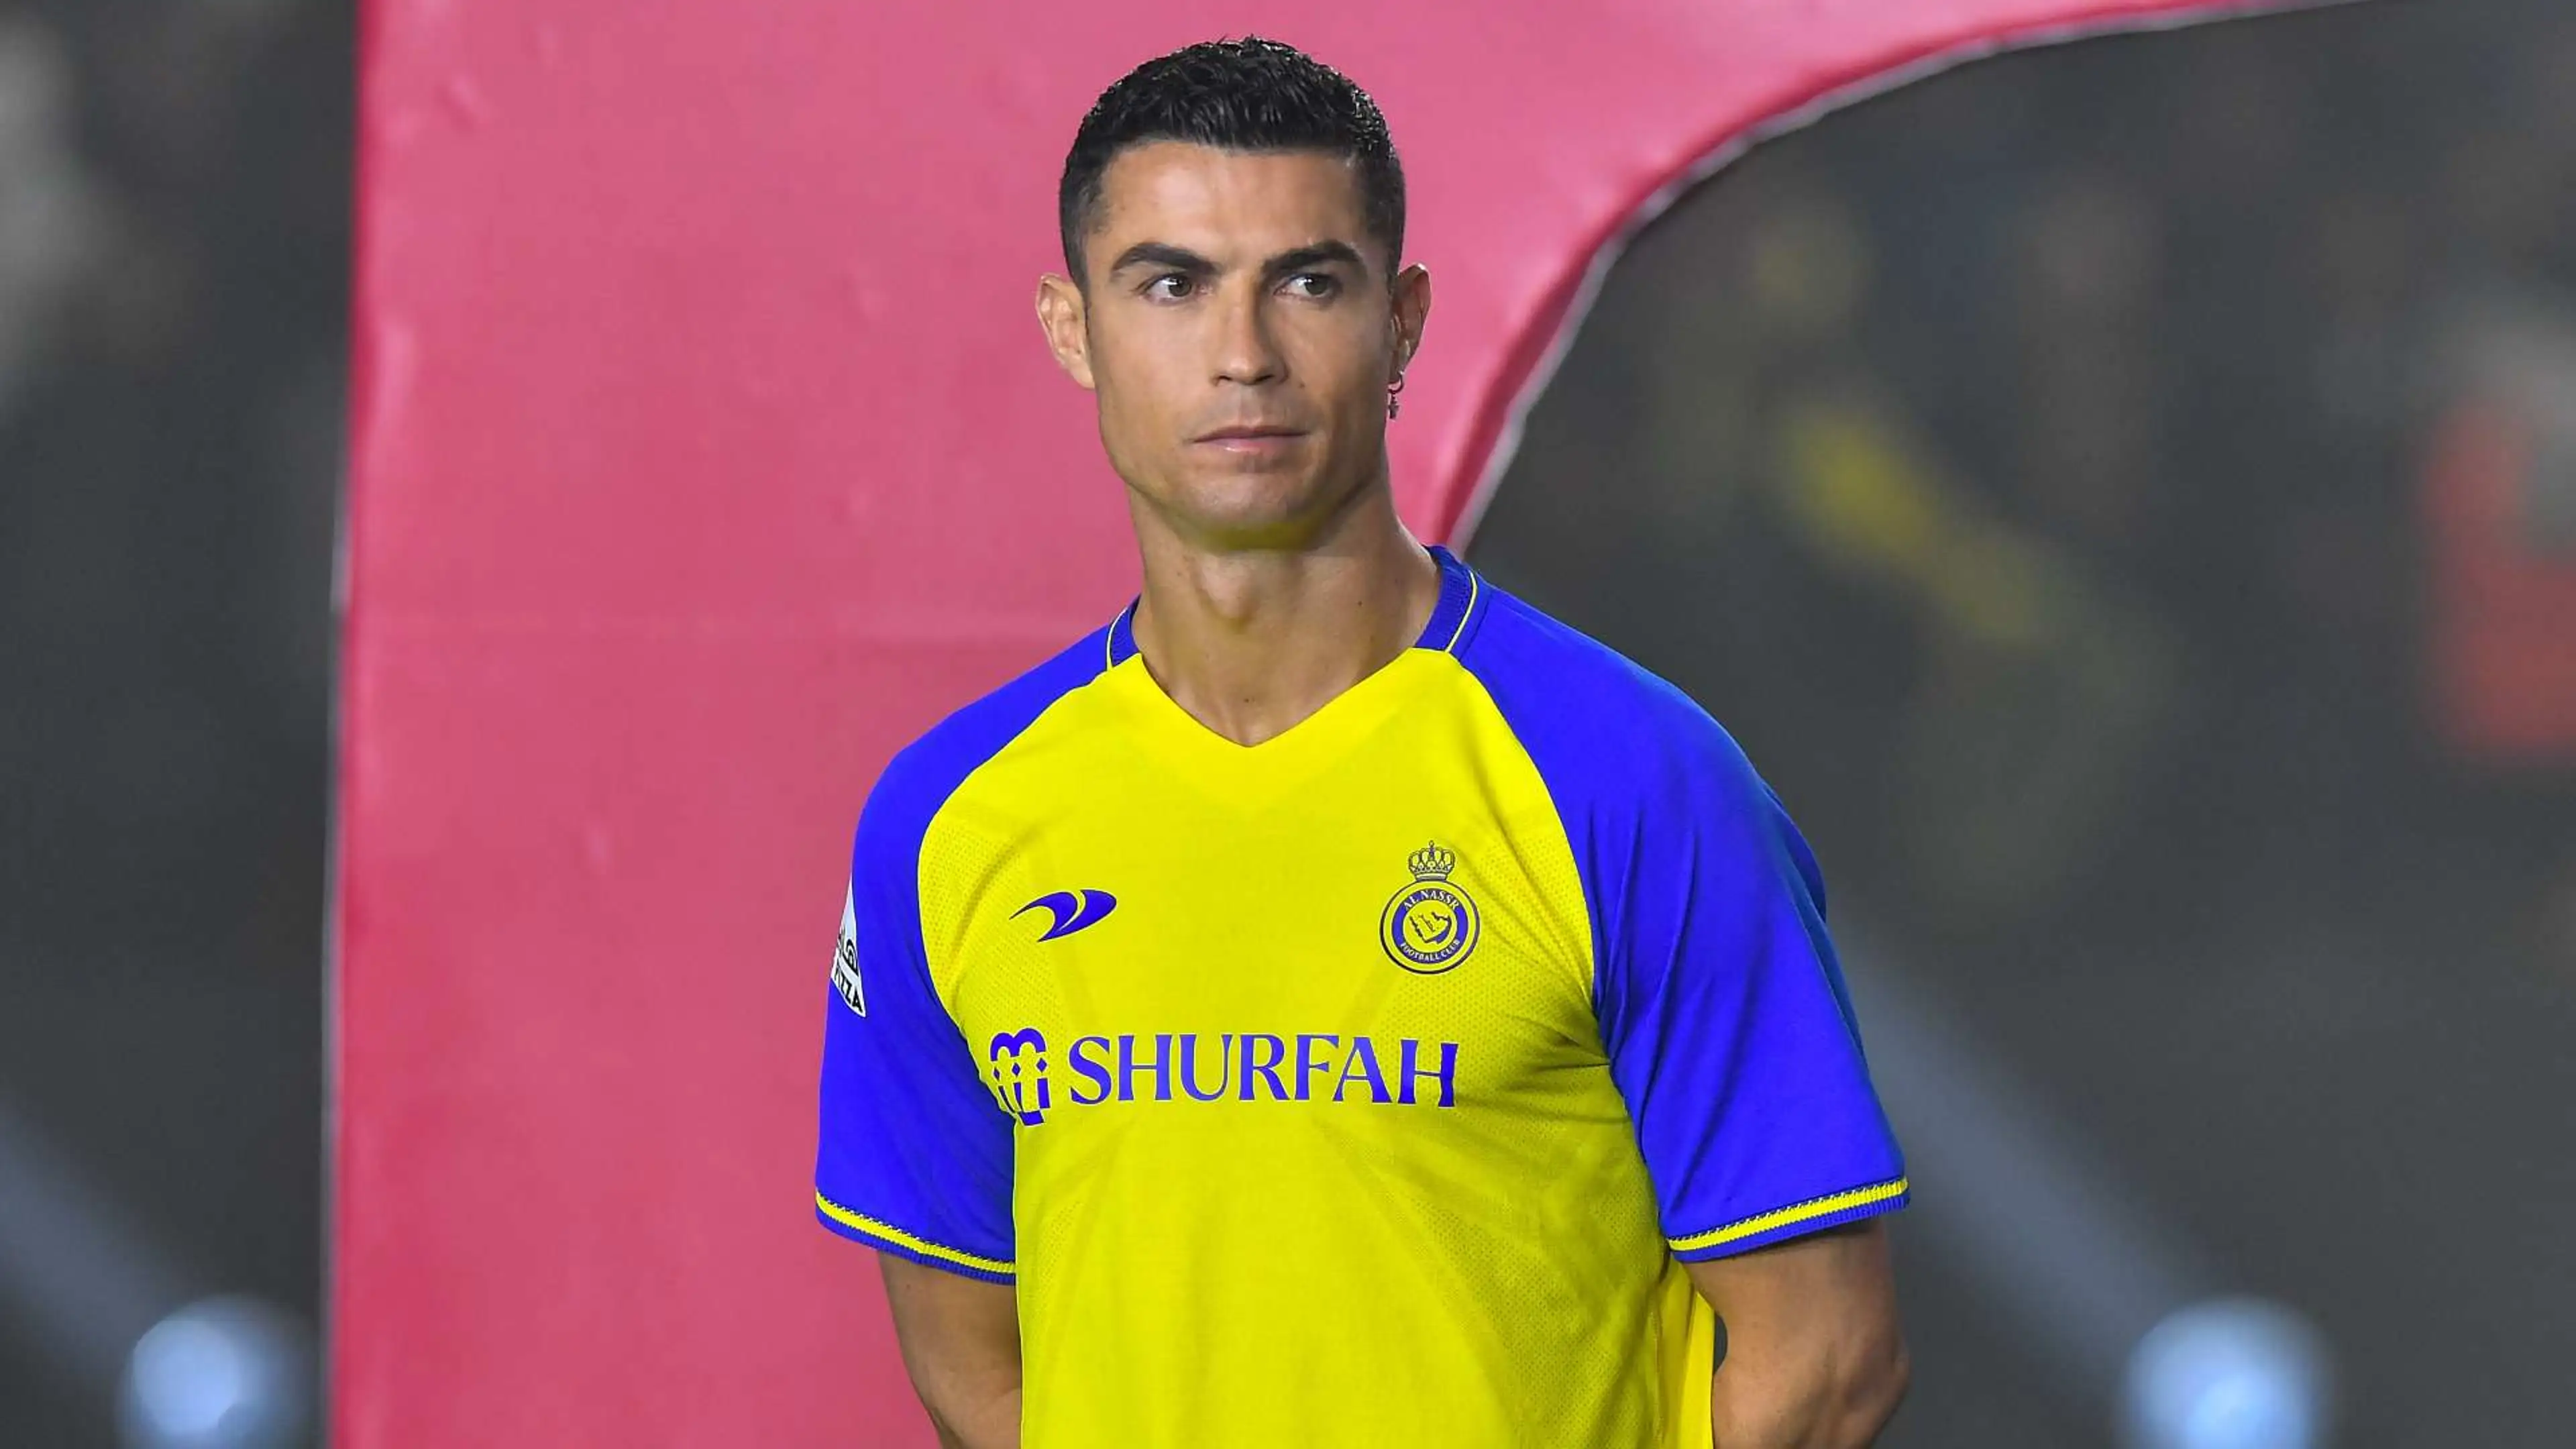 Cristiano Ronaldo-Goals Galore: A Scoring Machine in Yellow and Blue